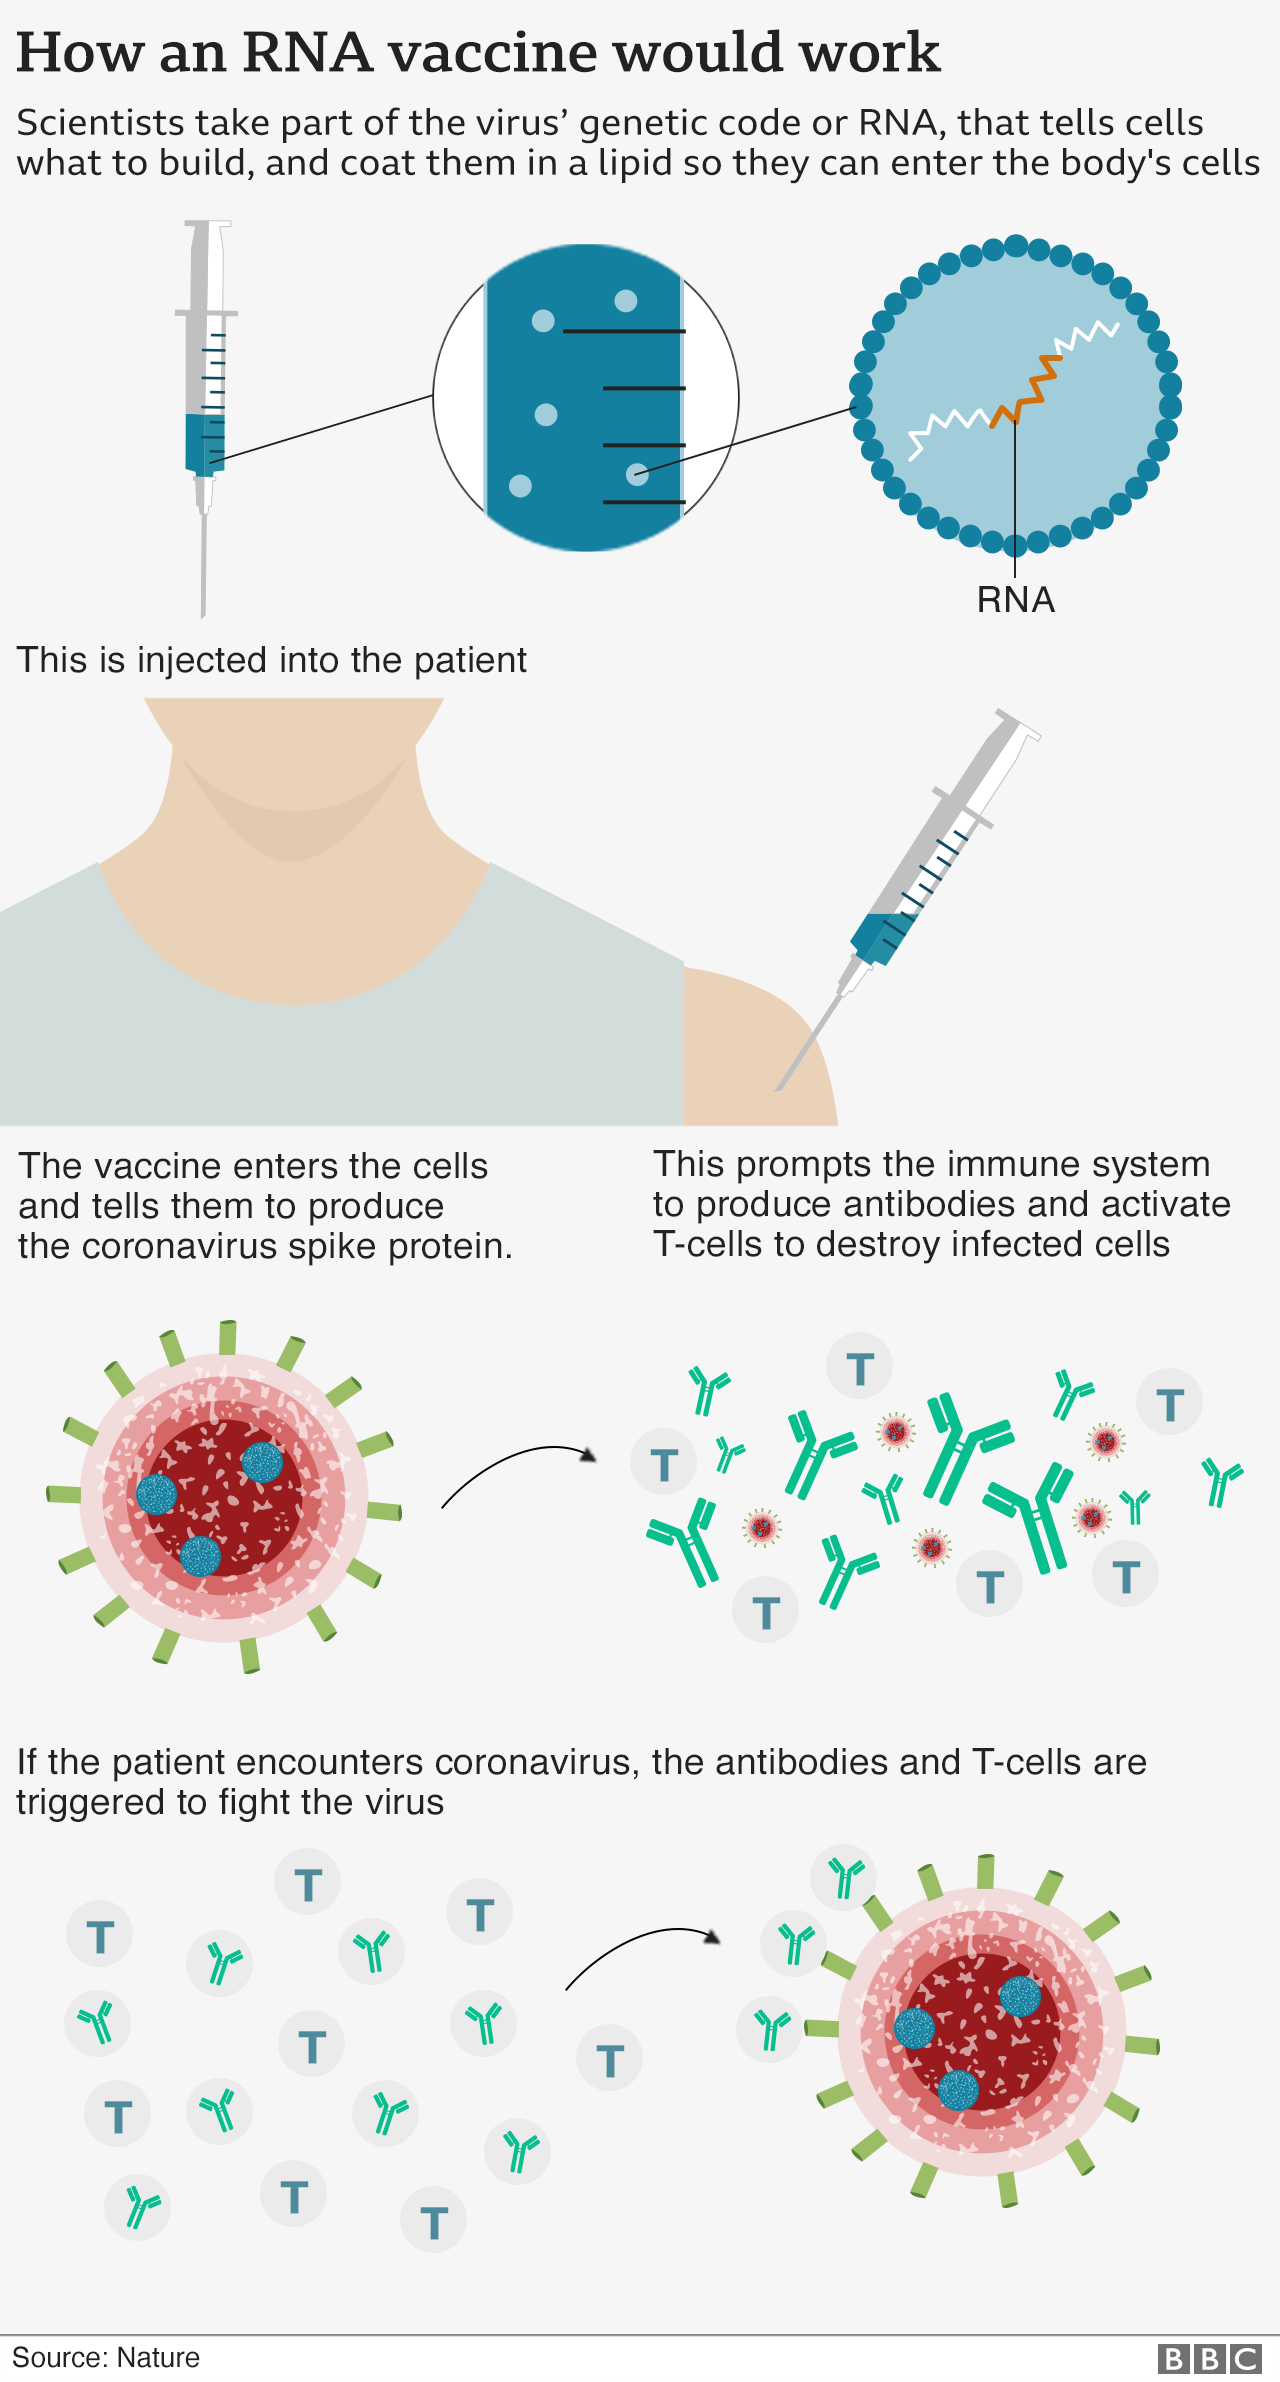 UK approves Pfizer/BioNTech COVID-19 vaccine for mass immunisation